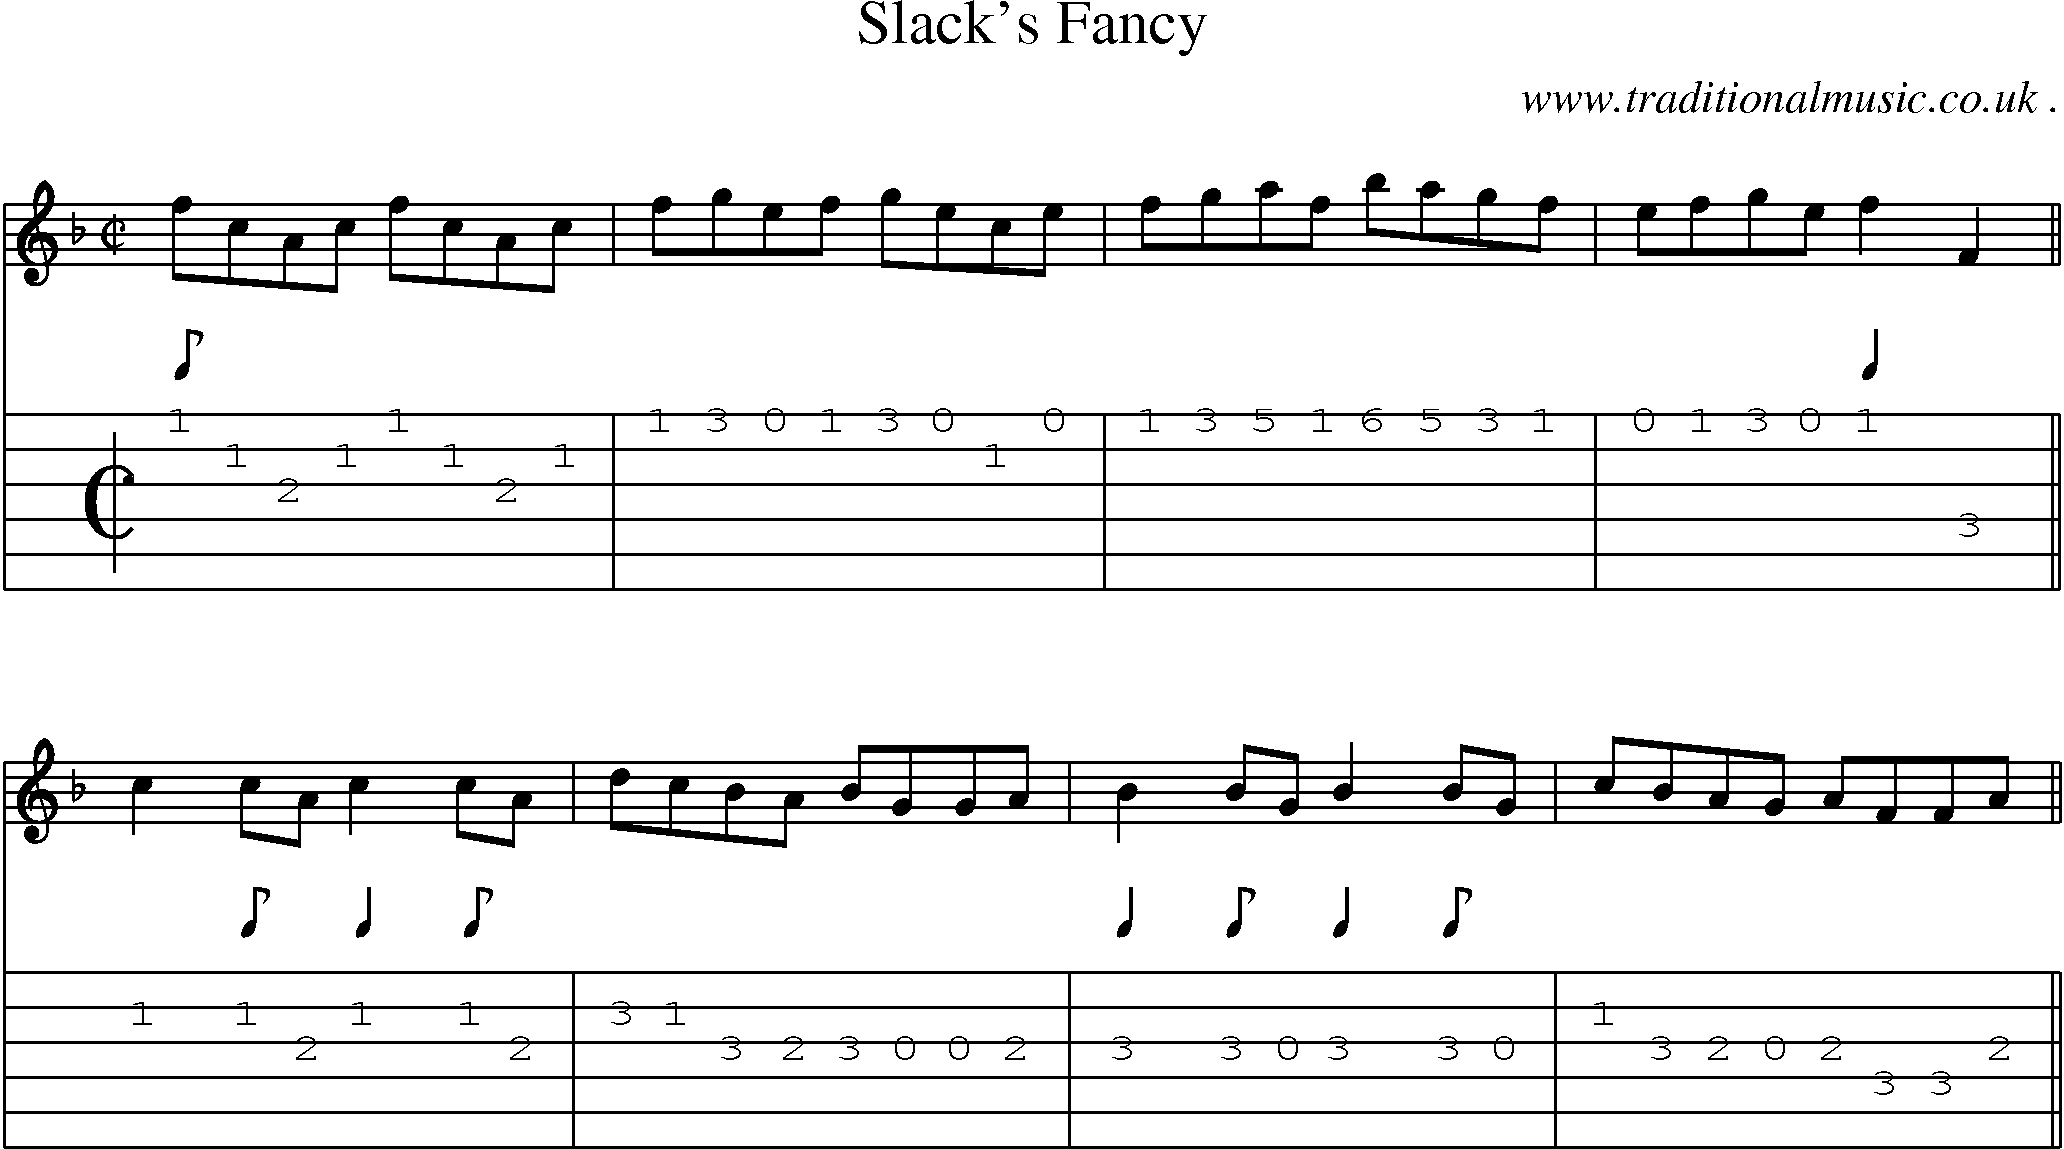 Sheet-Music and Guitar Tabs for Slacks Fancy